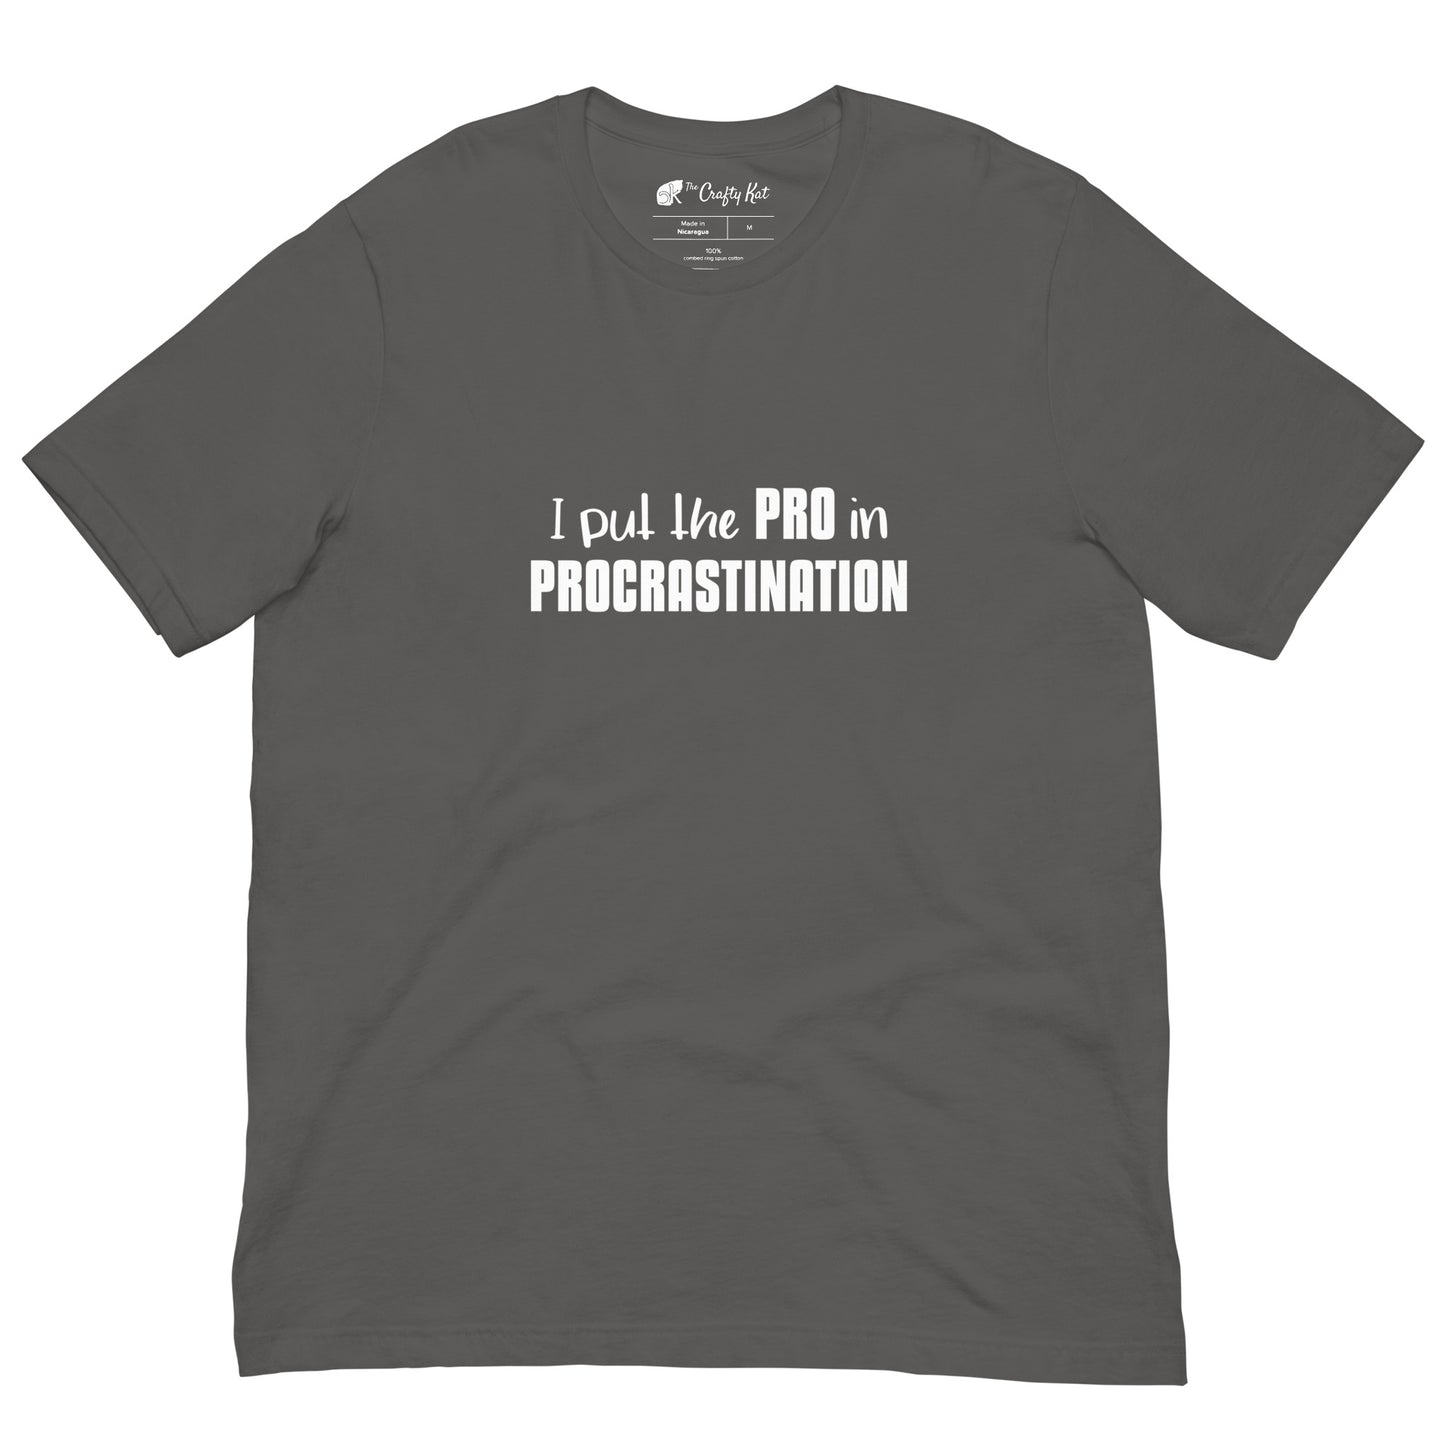 Asphalt grey unisex t-shirt with text graphic: "I put the PRO in PROCRASTINATION"